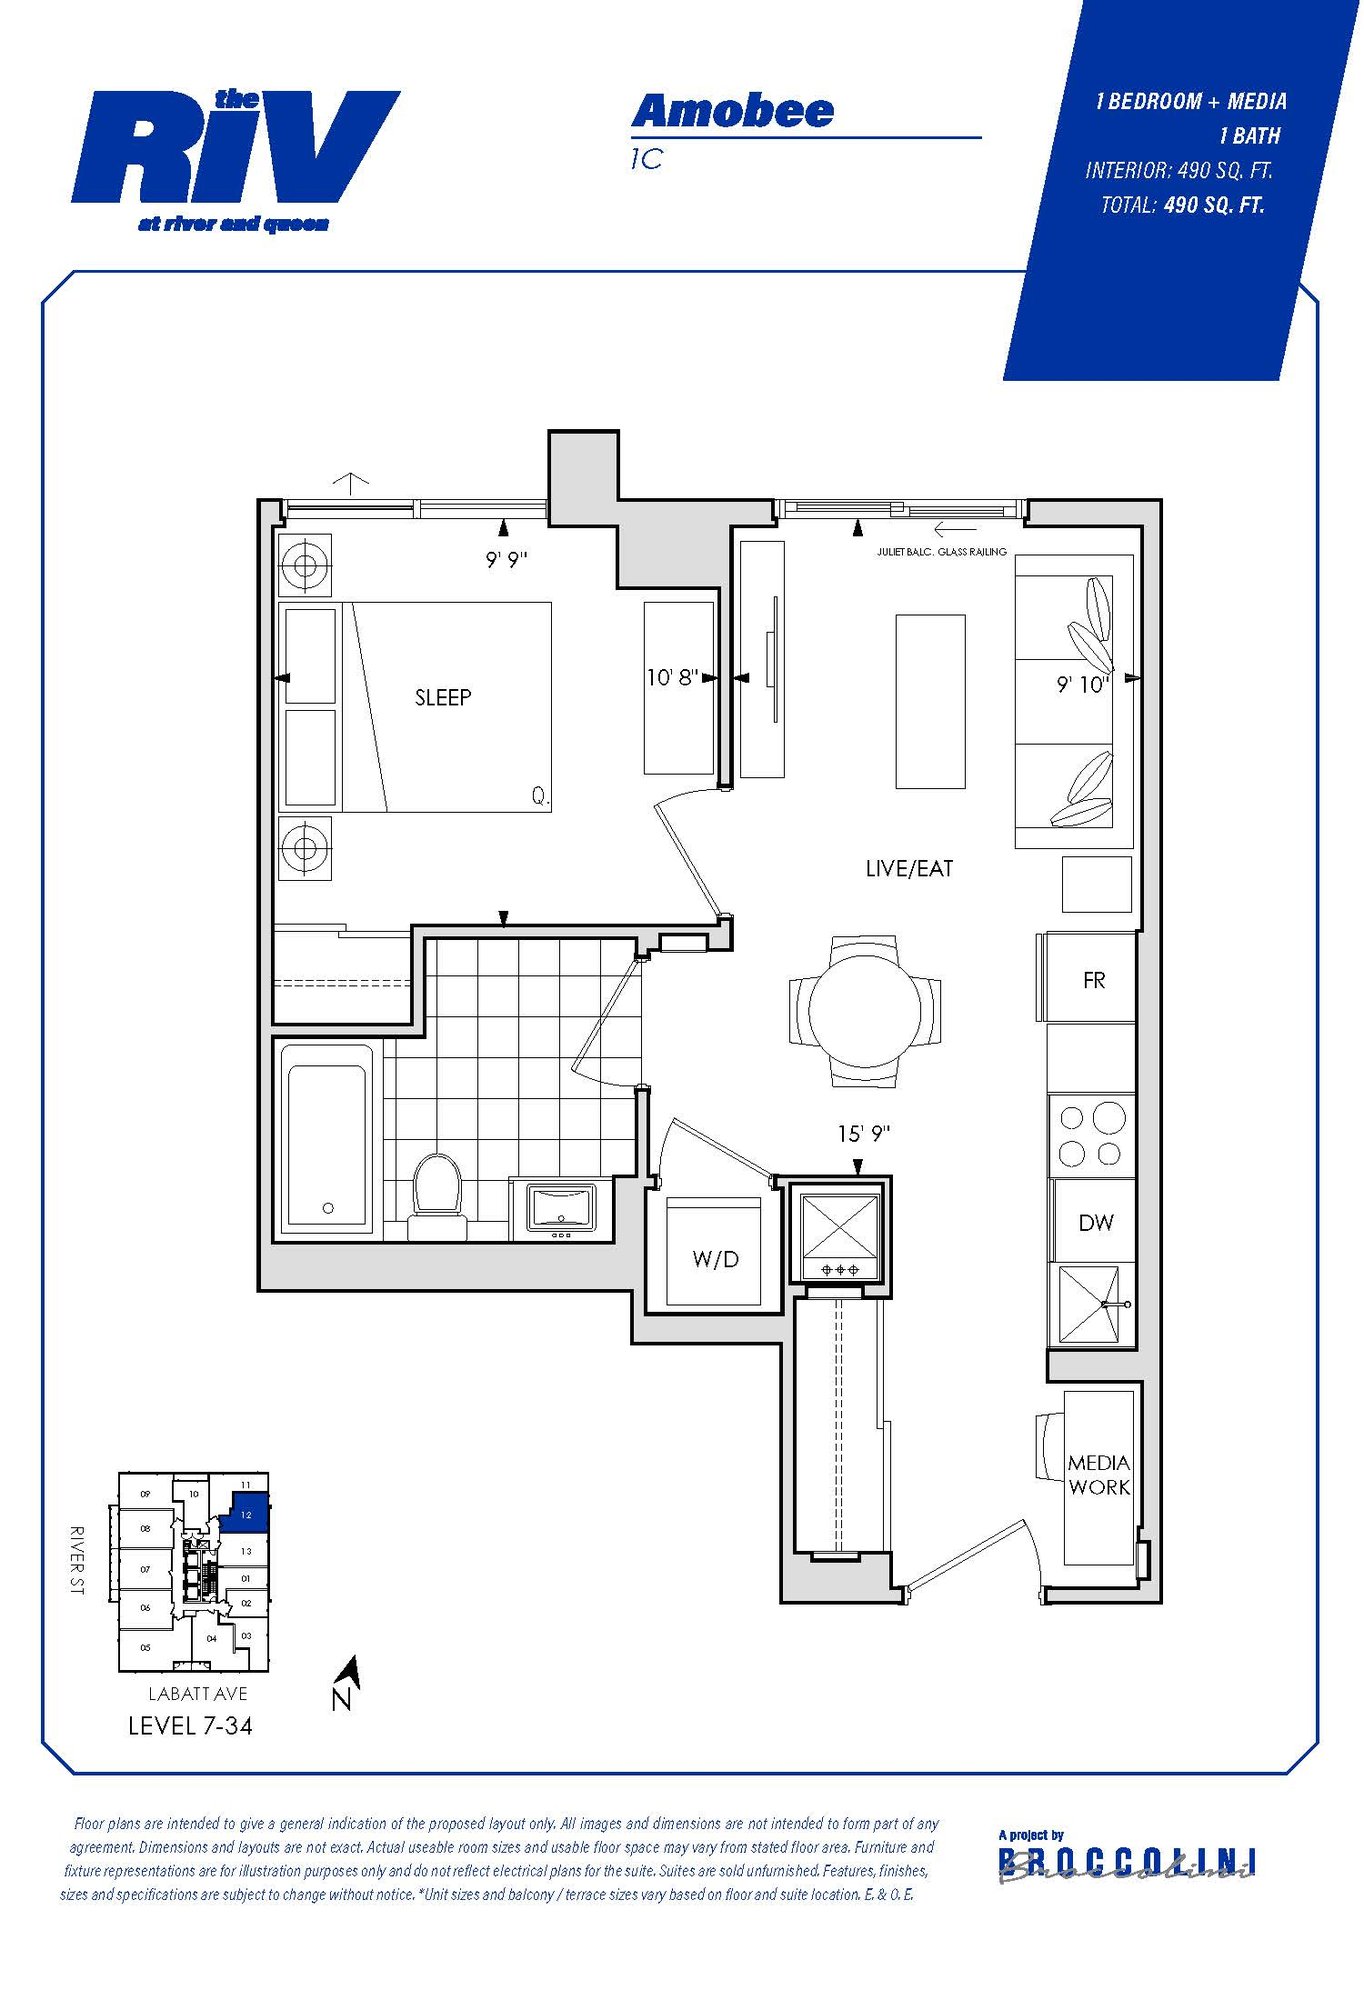 Floor plan for Amobee one bedroom unit in The Riv